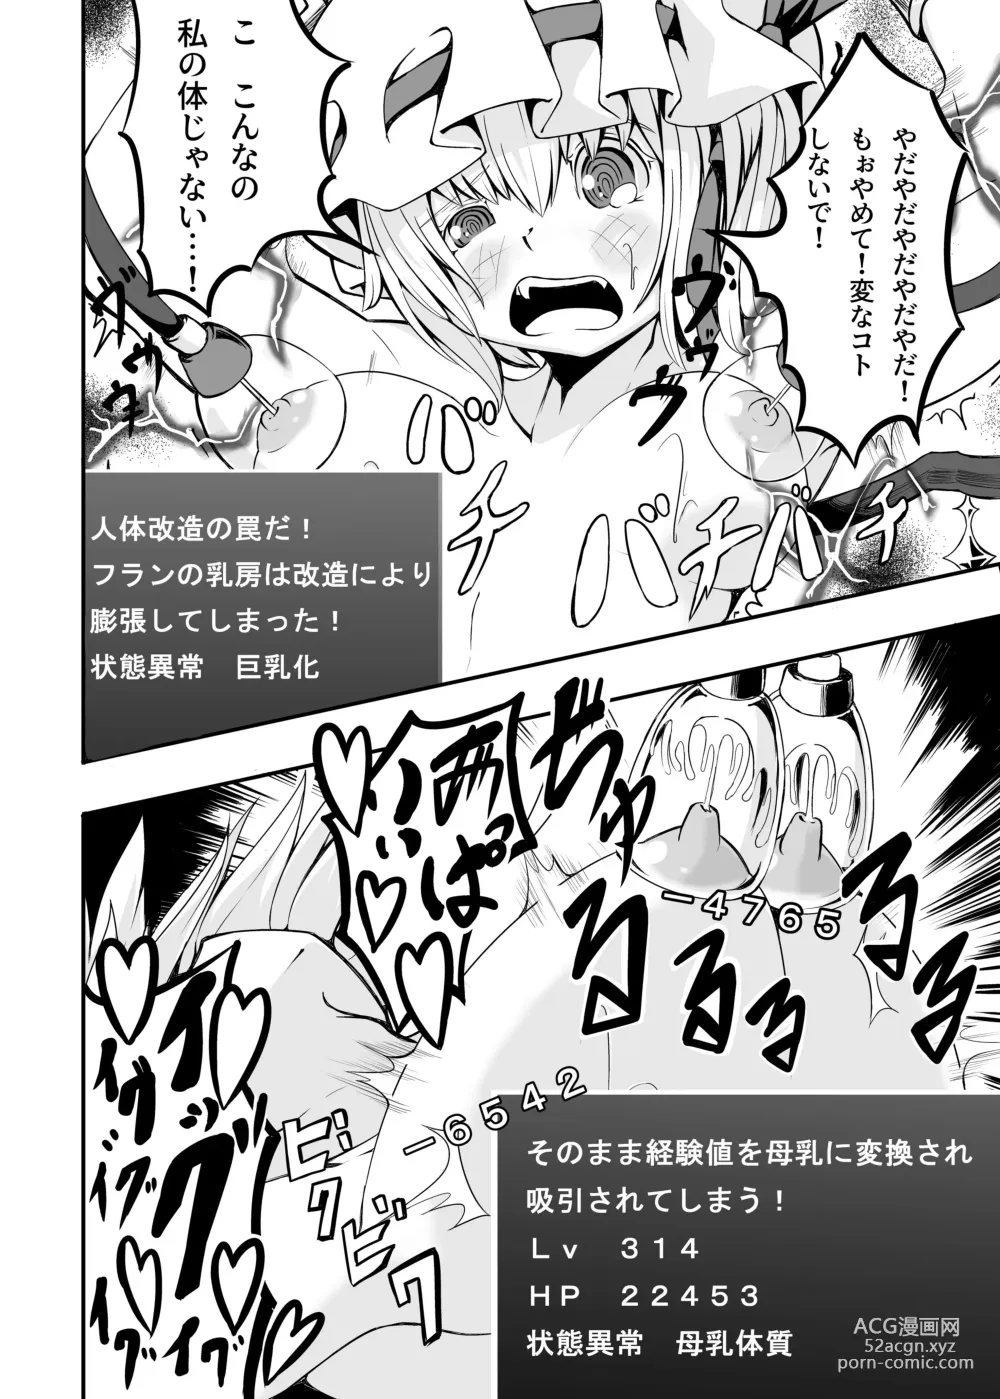 Page 11 of doujinshi Flan-chan and ETD